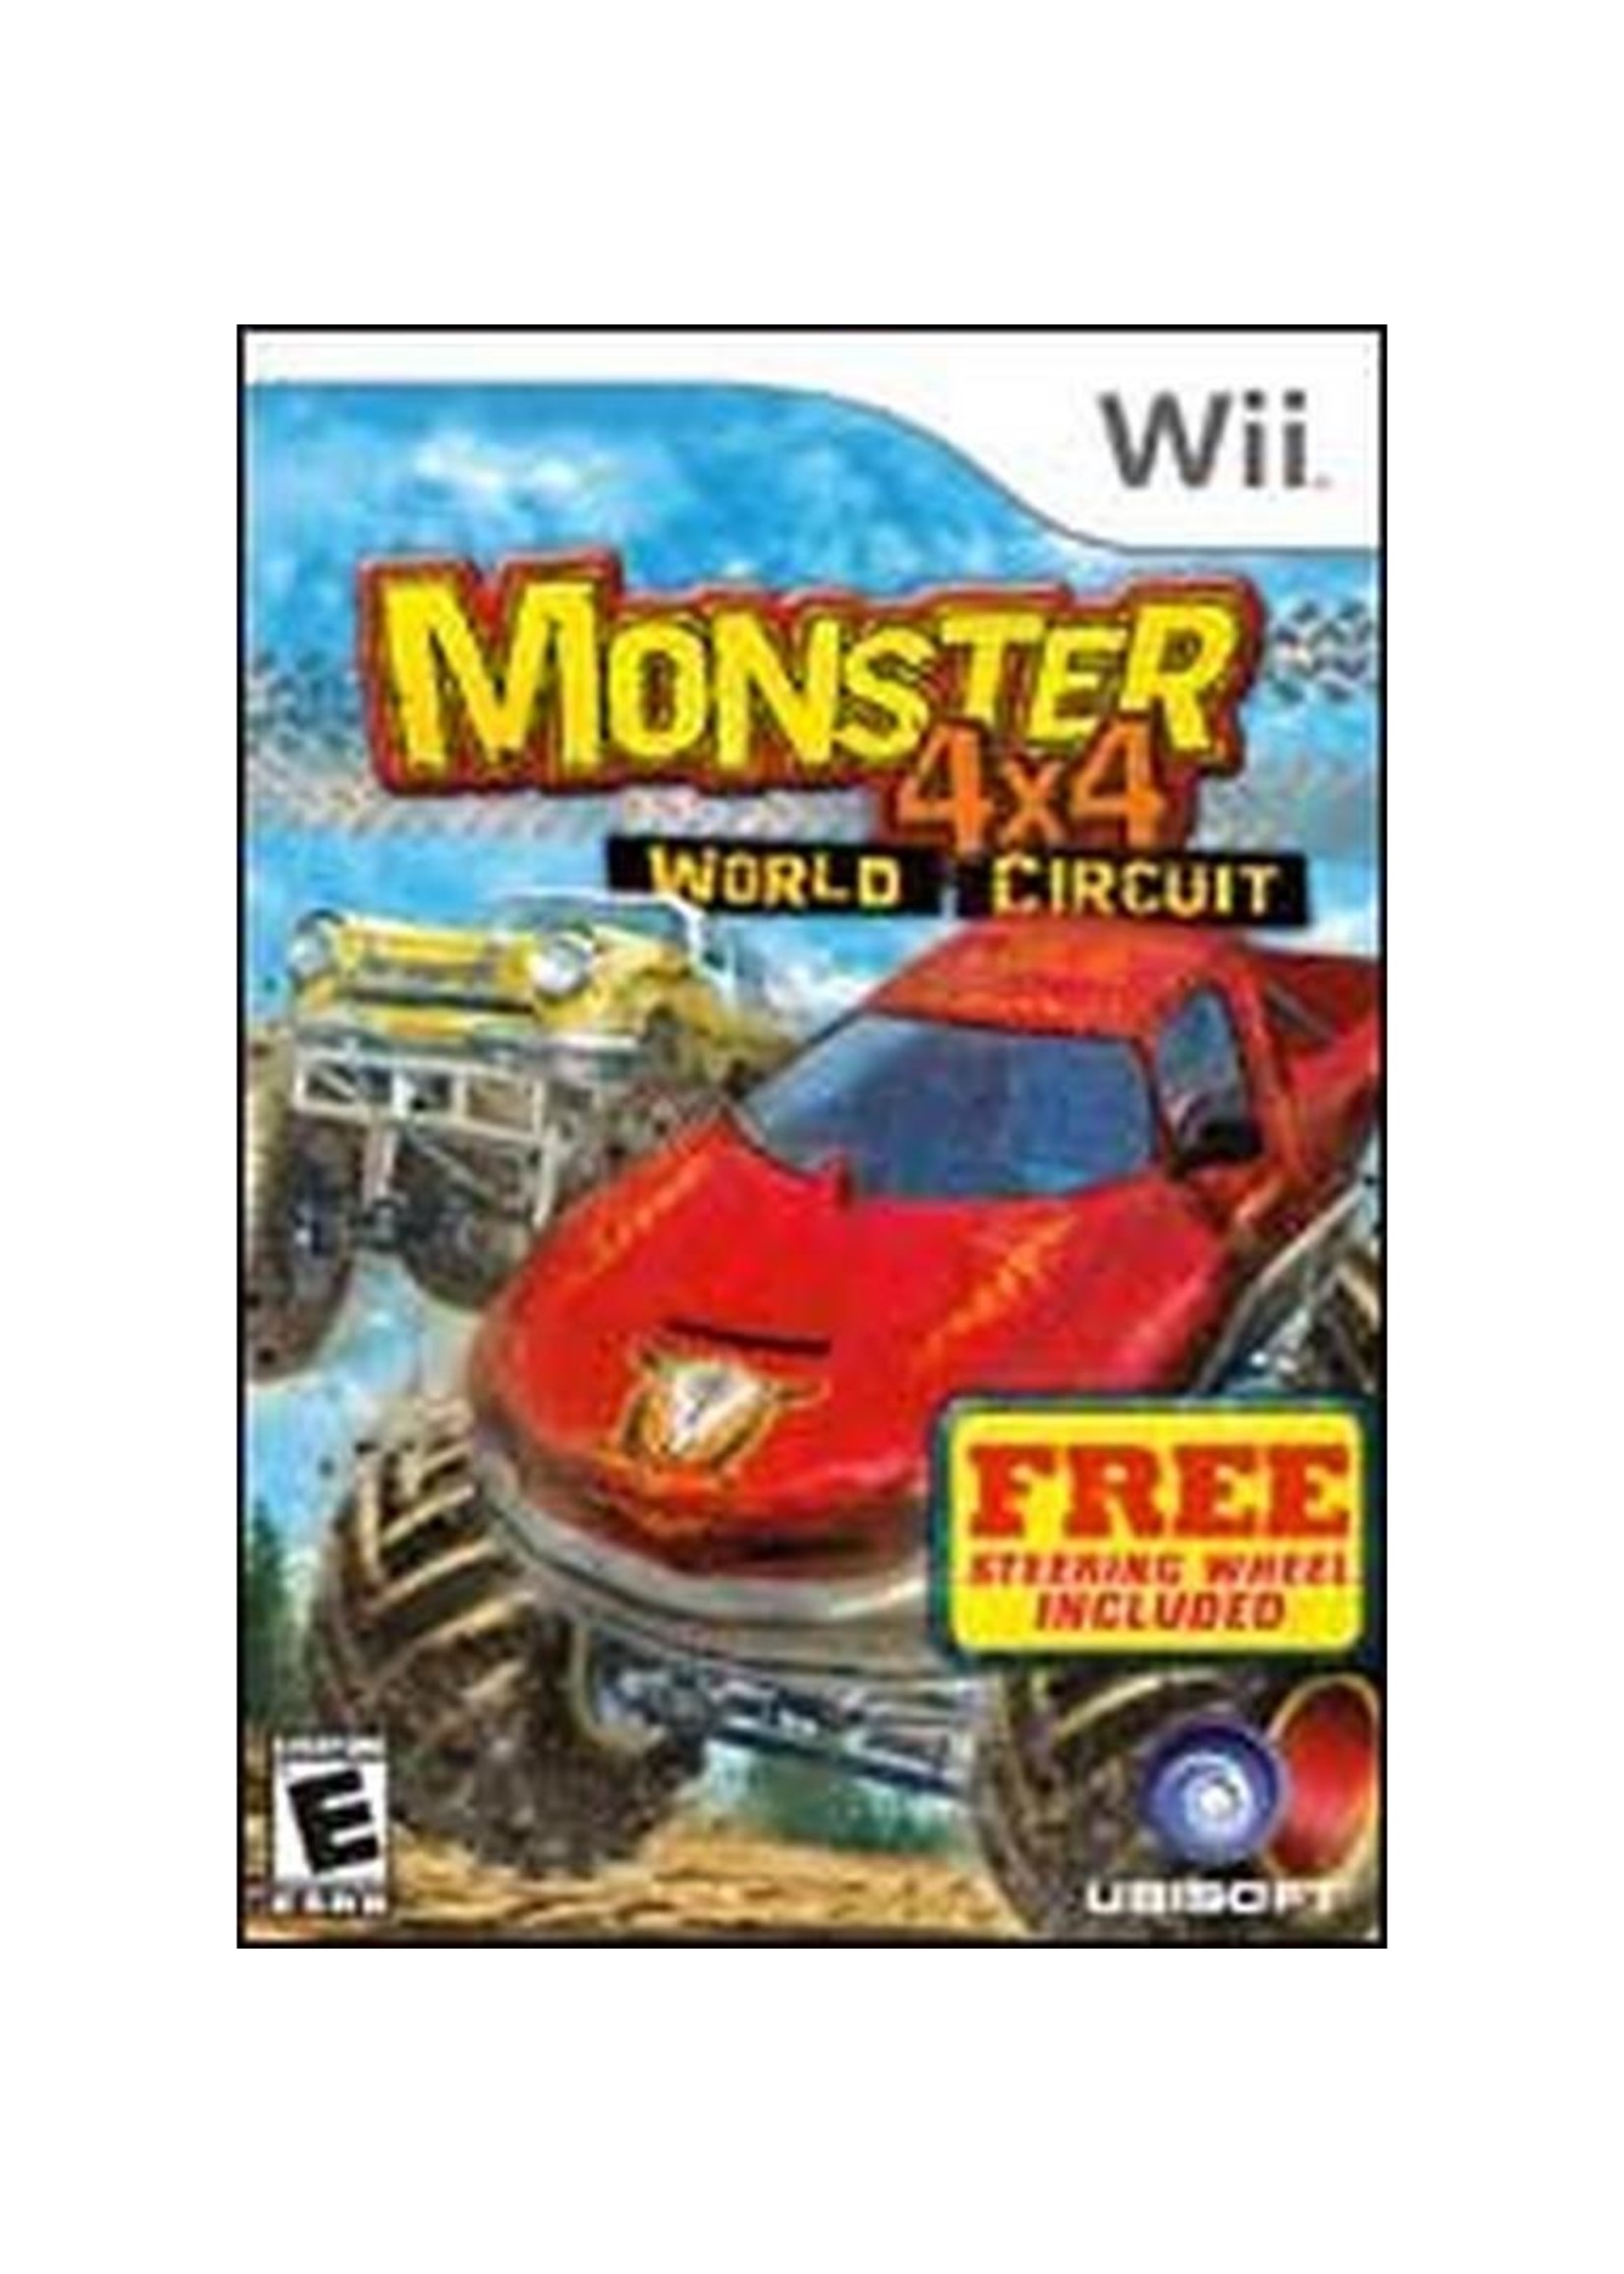 Monster 4x4 World Circuit - Wii PrePlayed